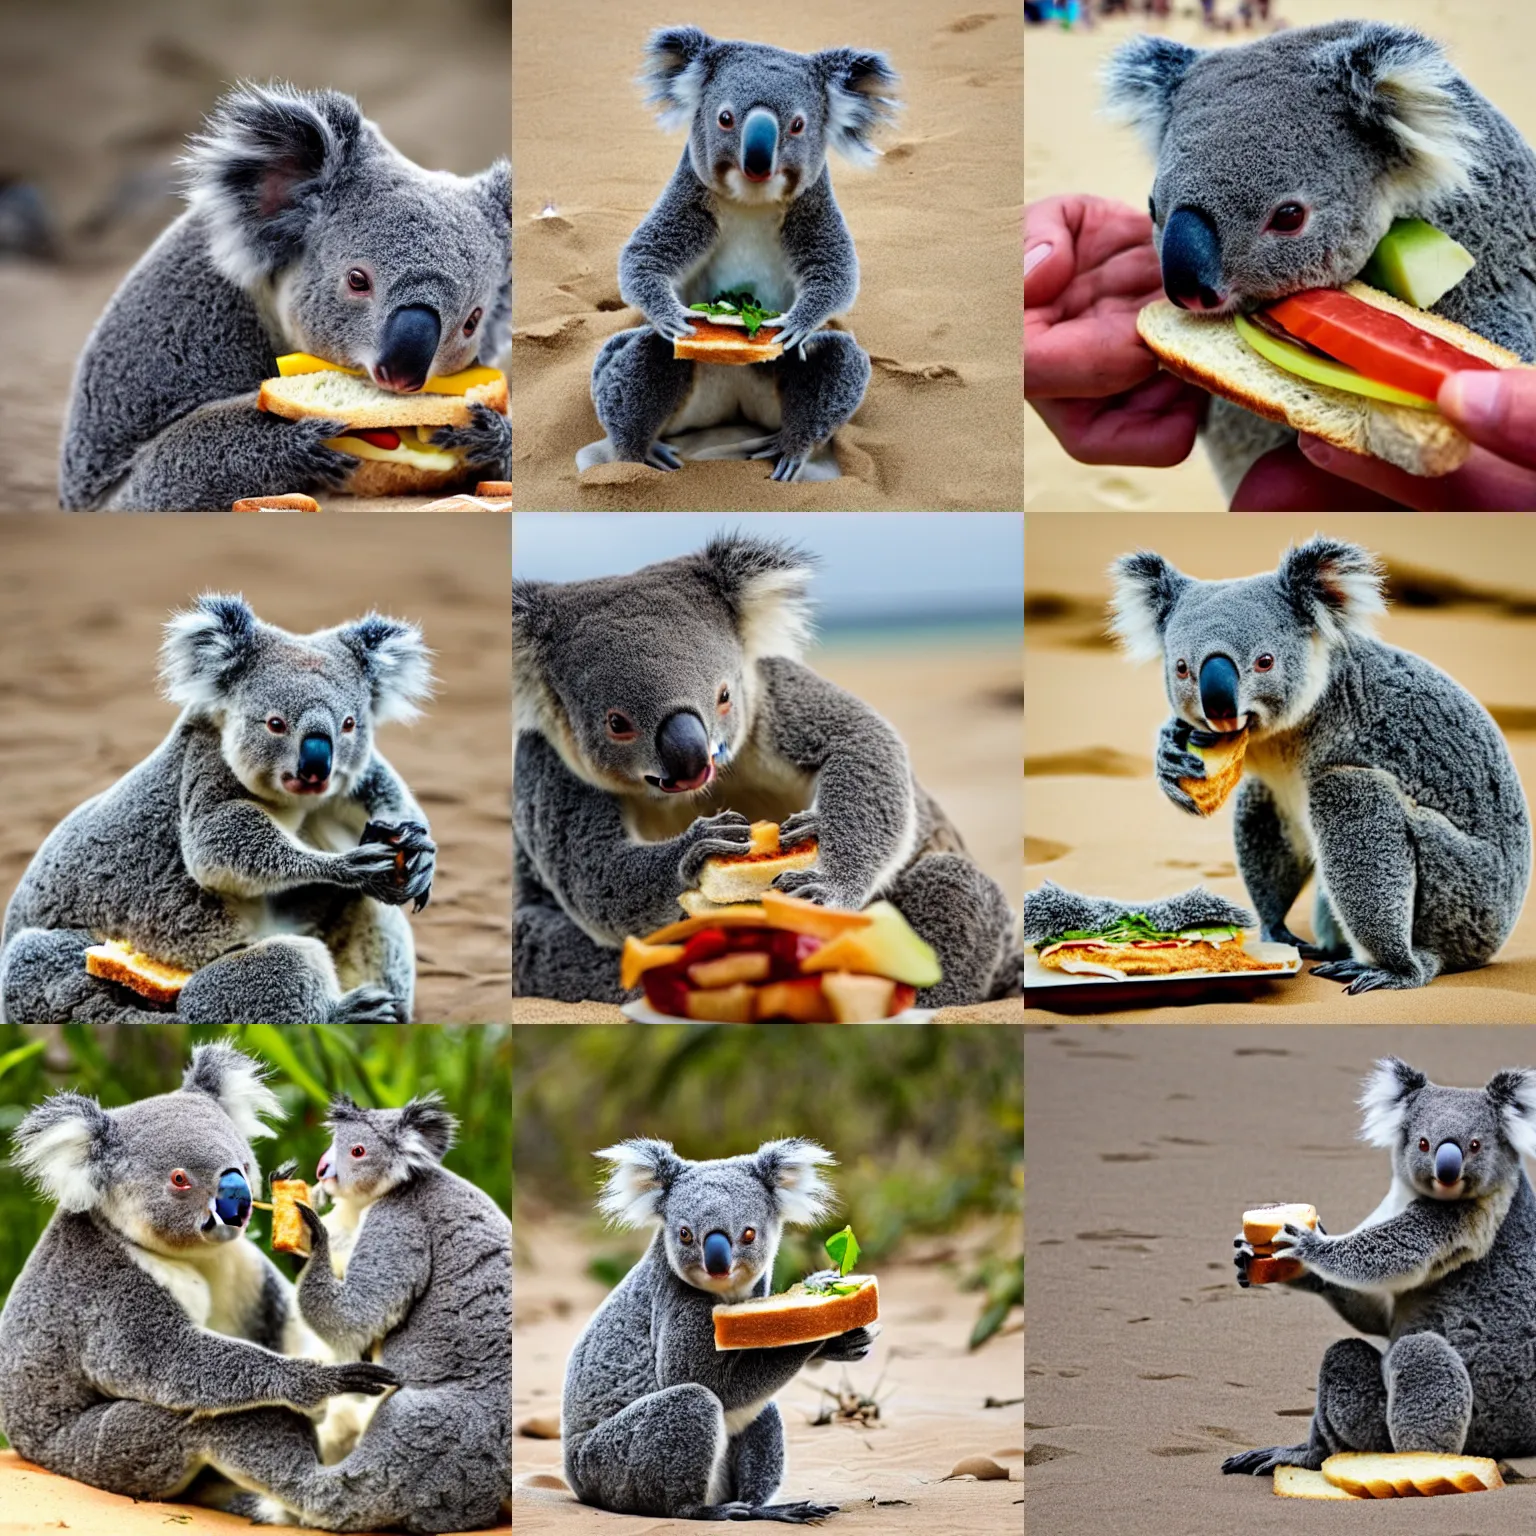 Prompt: a koala eating a sandwich on a beach